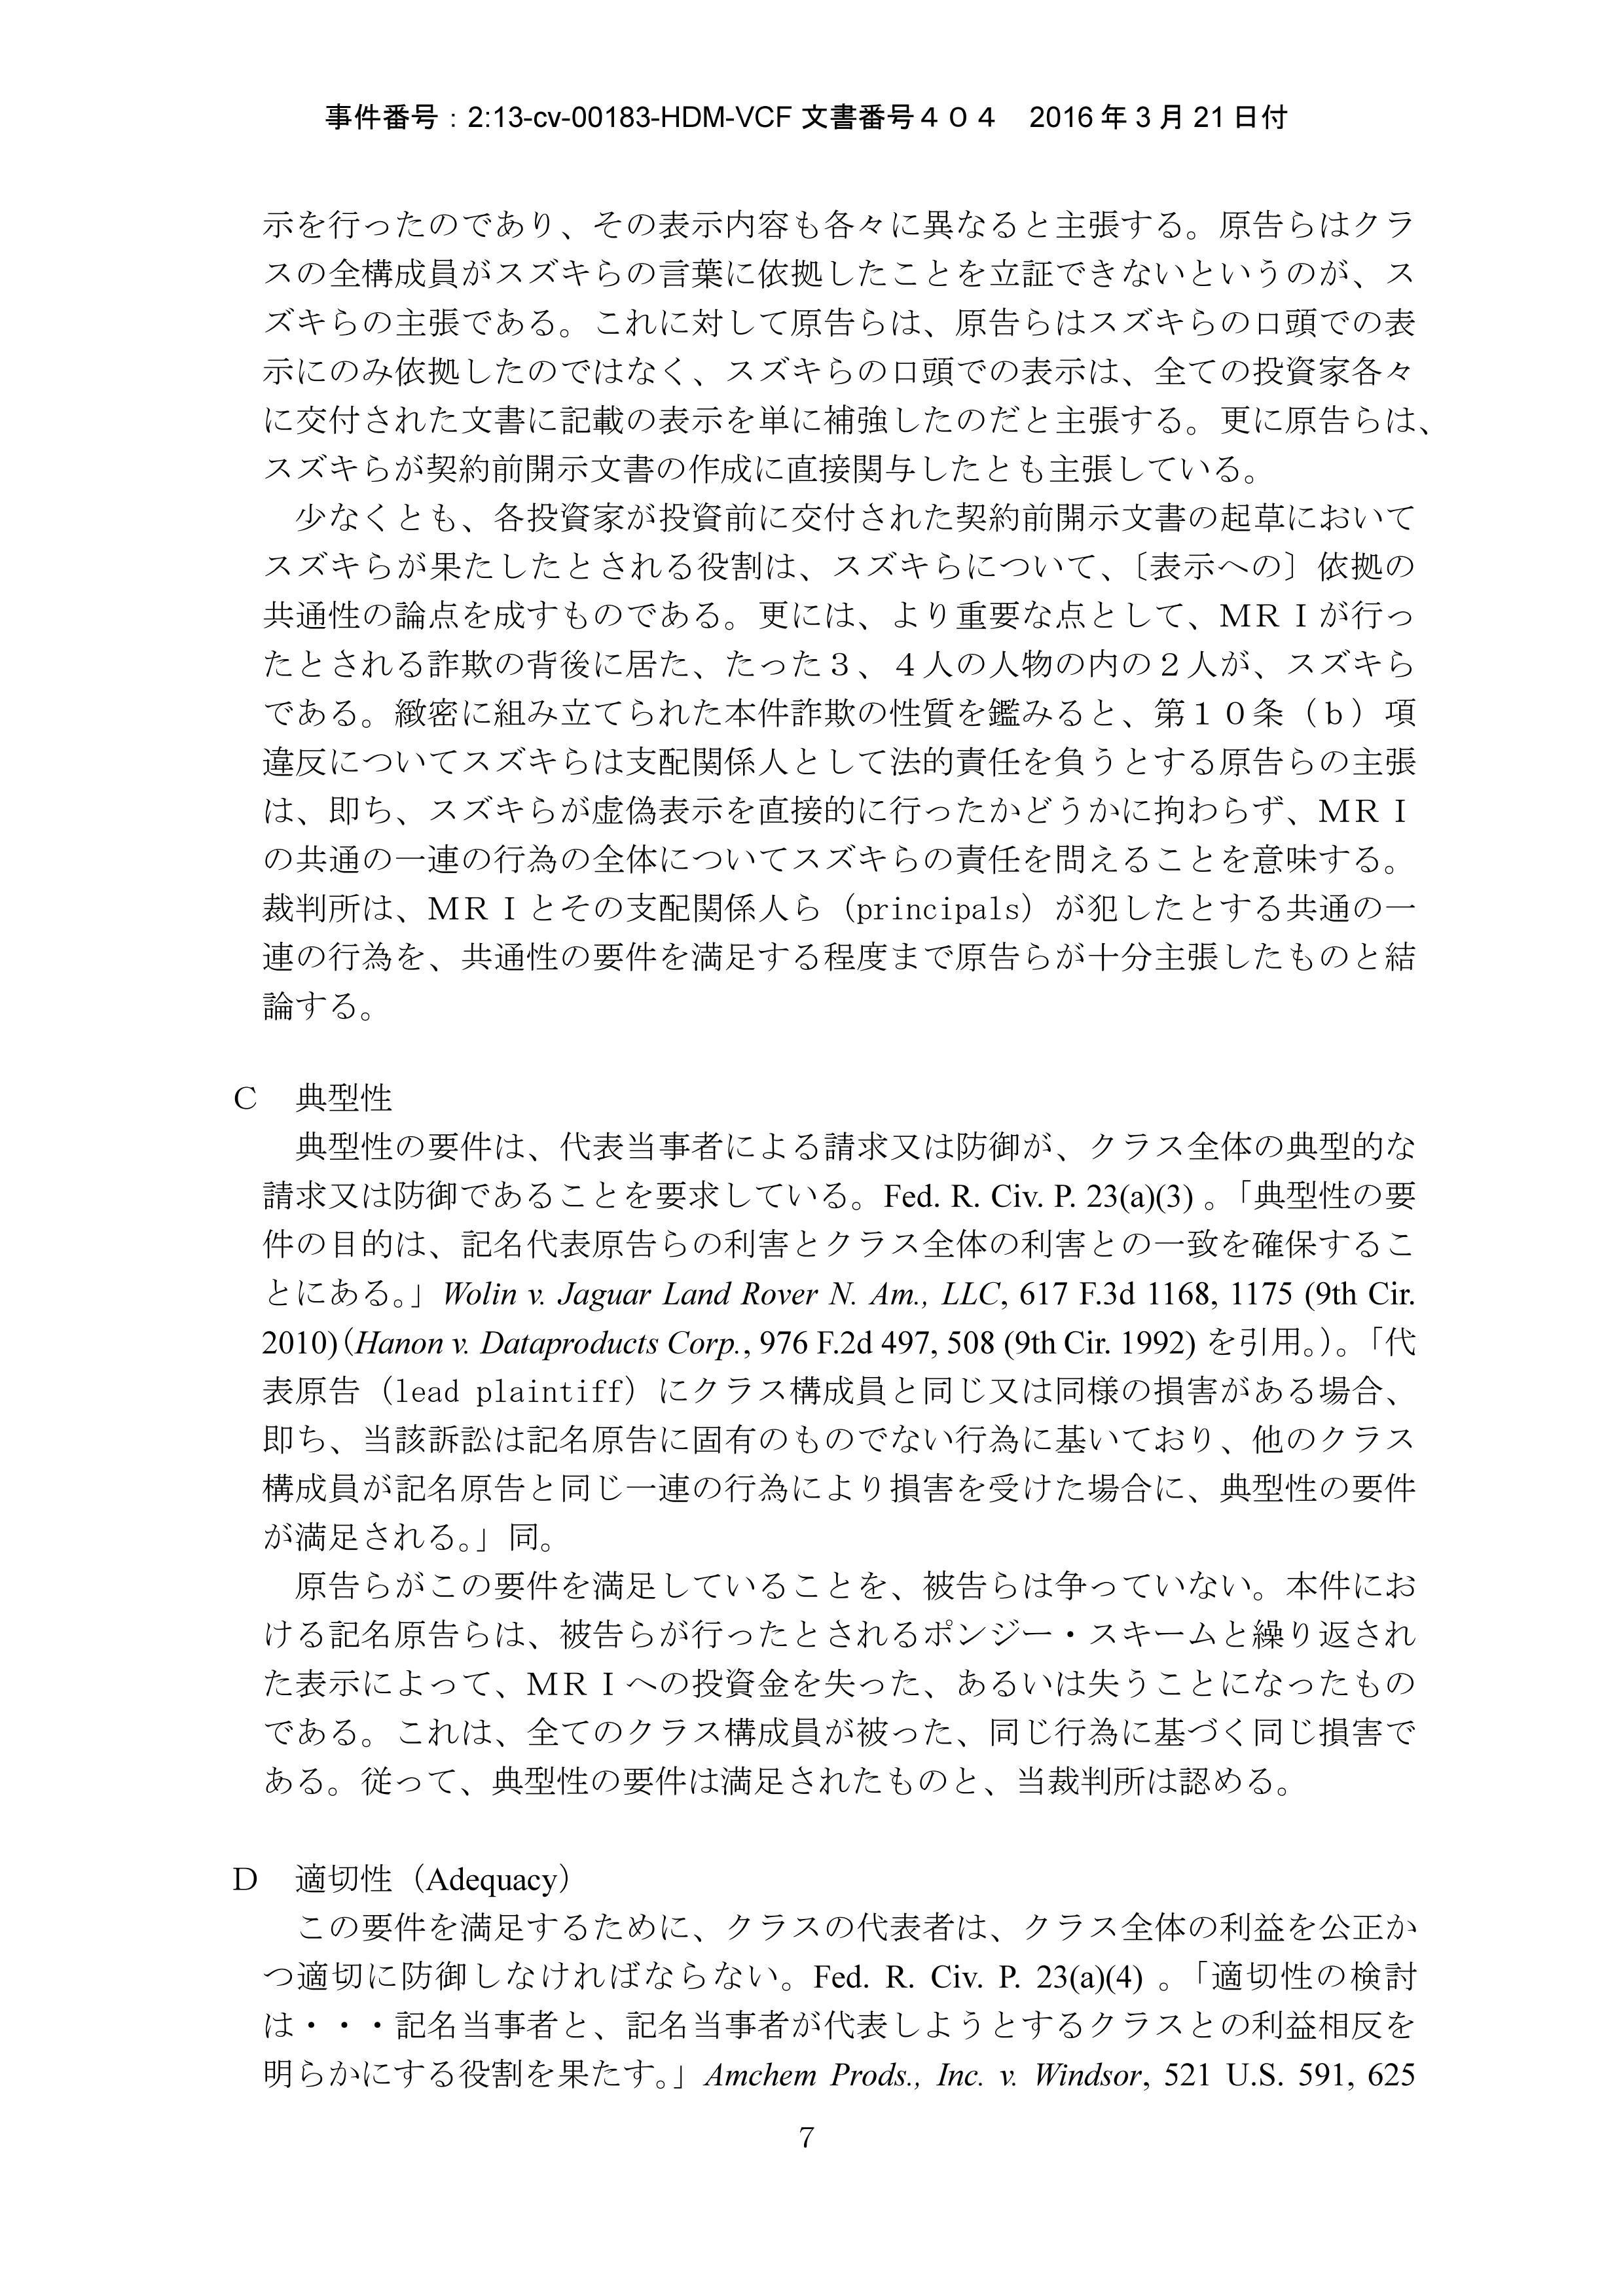 CA_Dkt 404_Order Granting Class Certification_Japanese translation_07